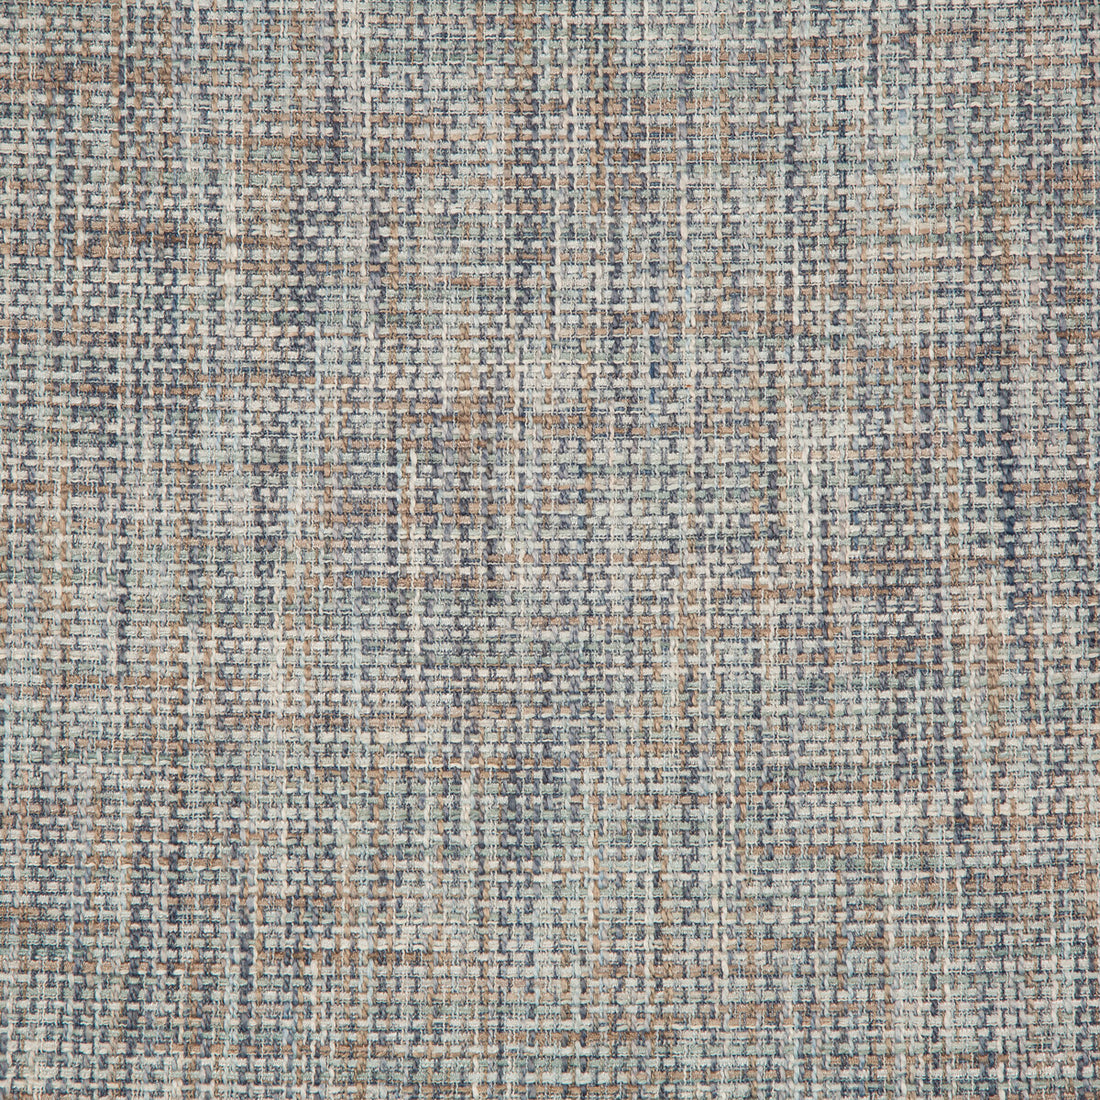 Kravet Smart fabric in 35928-1516 color - pattern 35928.1516.0 - by Kravet Smart in the Performance Kravetarmor collection